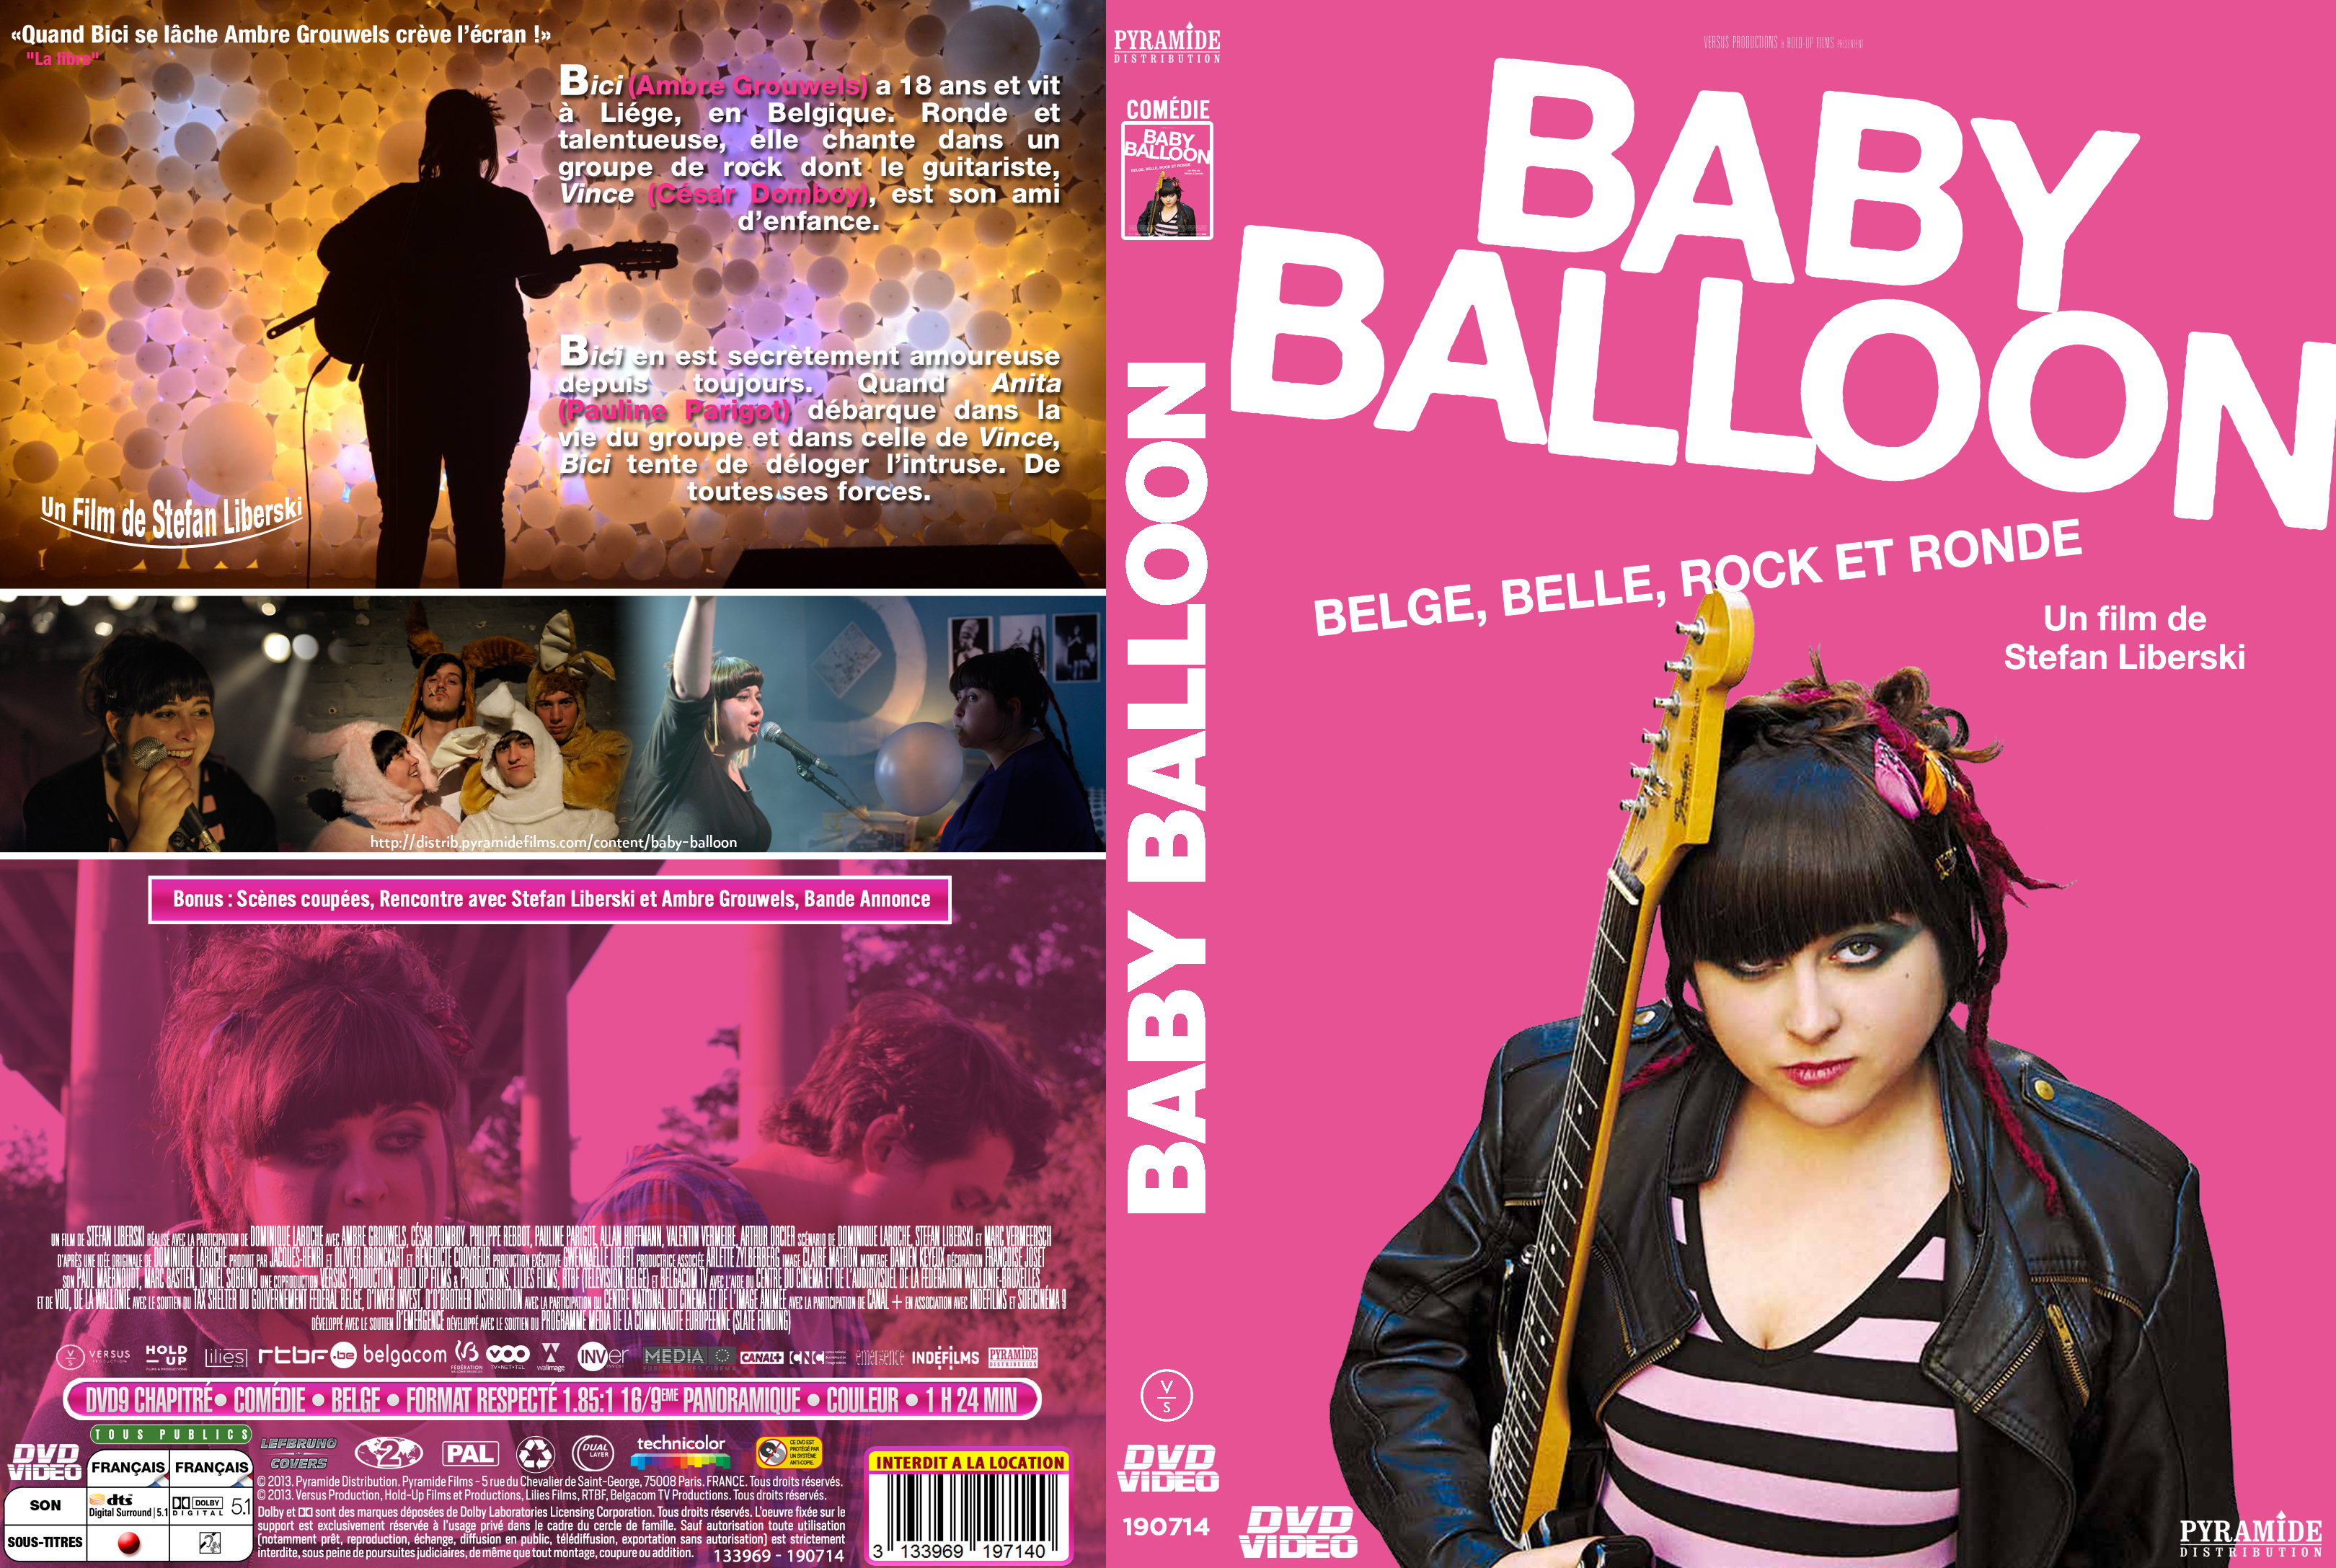 Jaquette DVD Baby Balloon custom